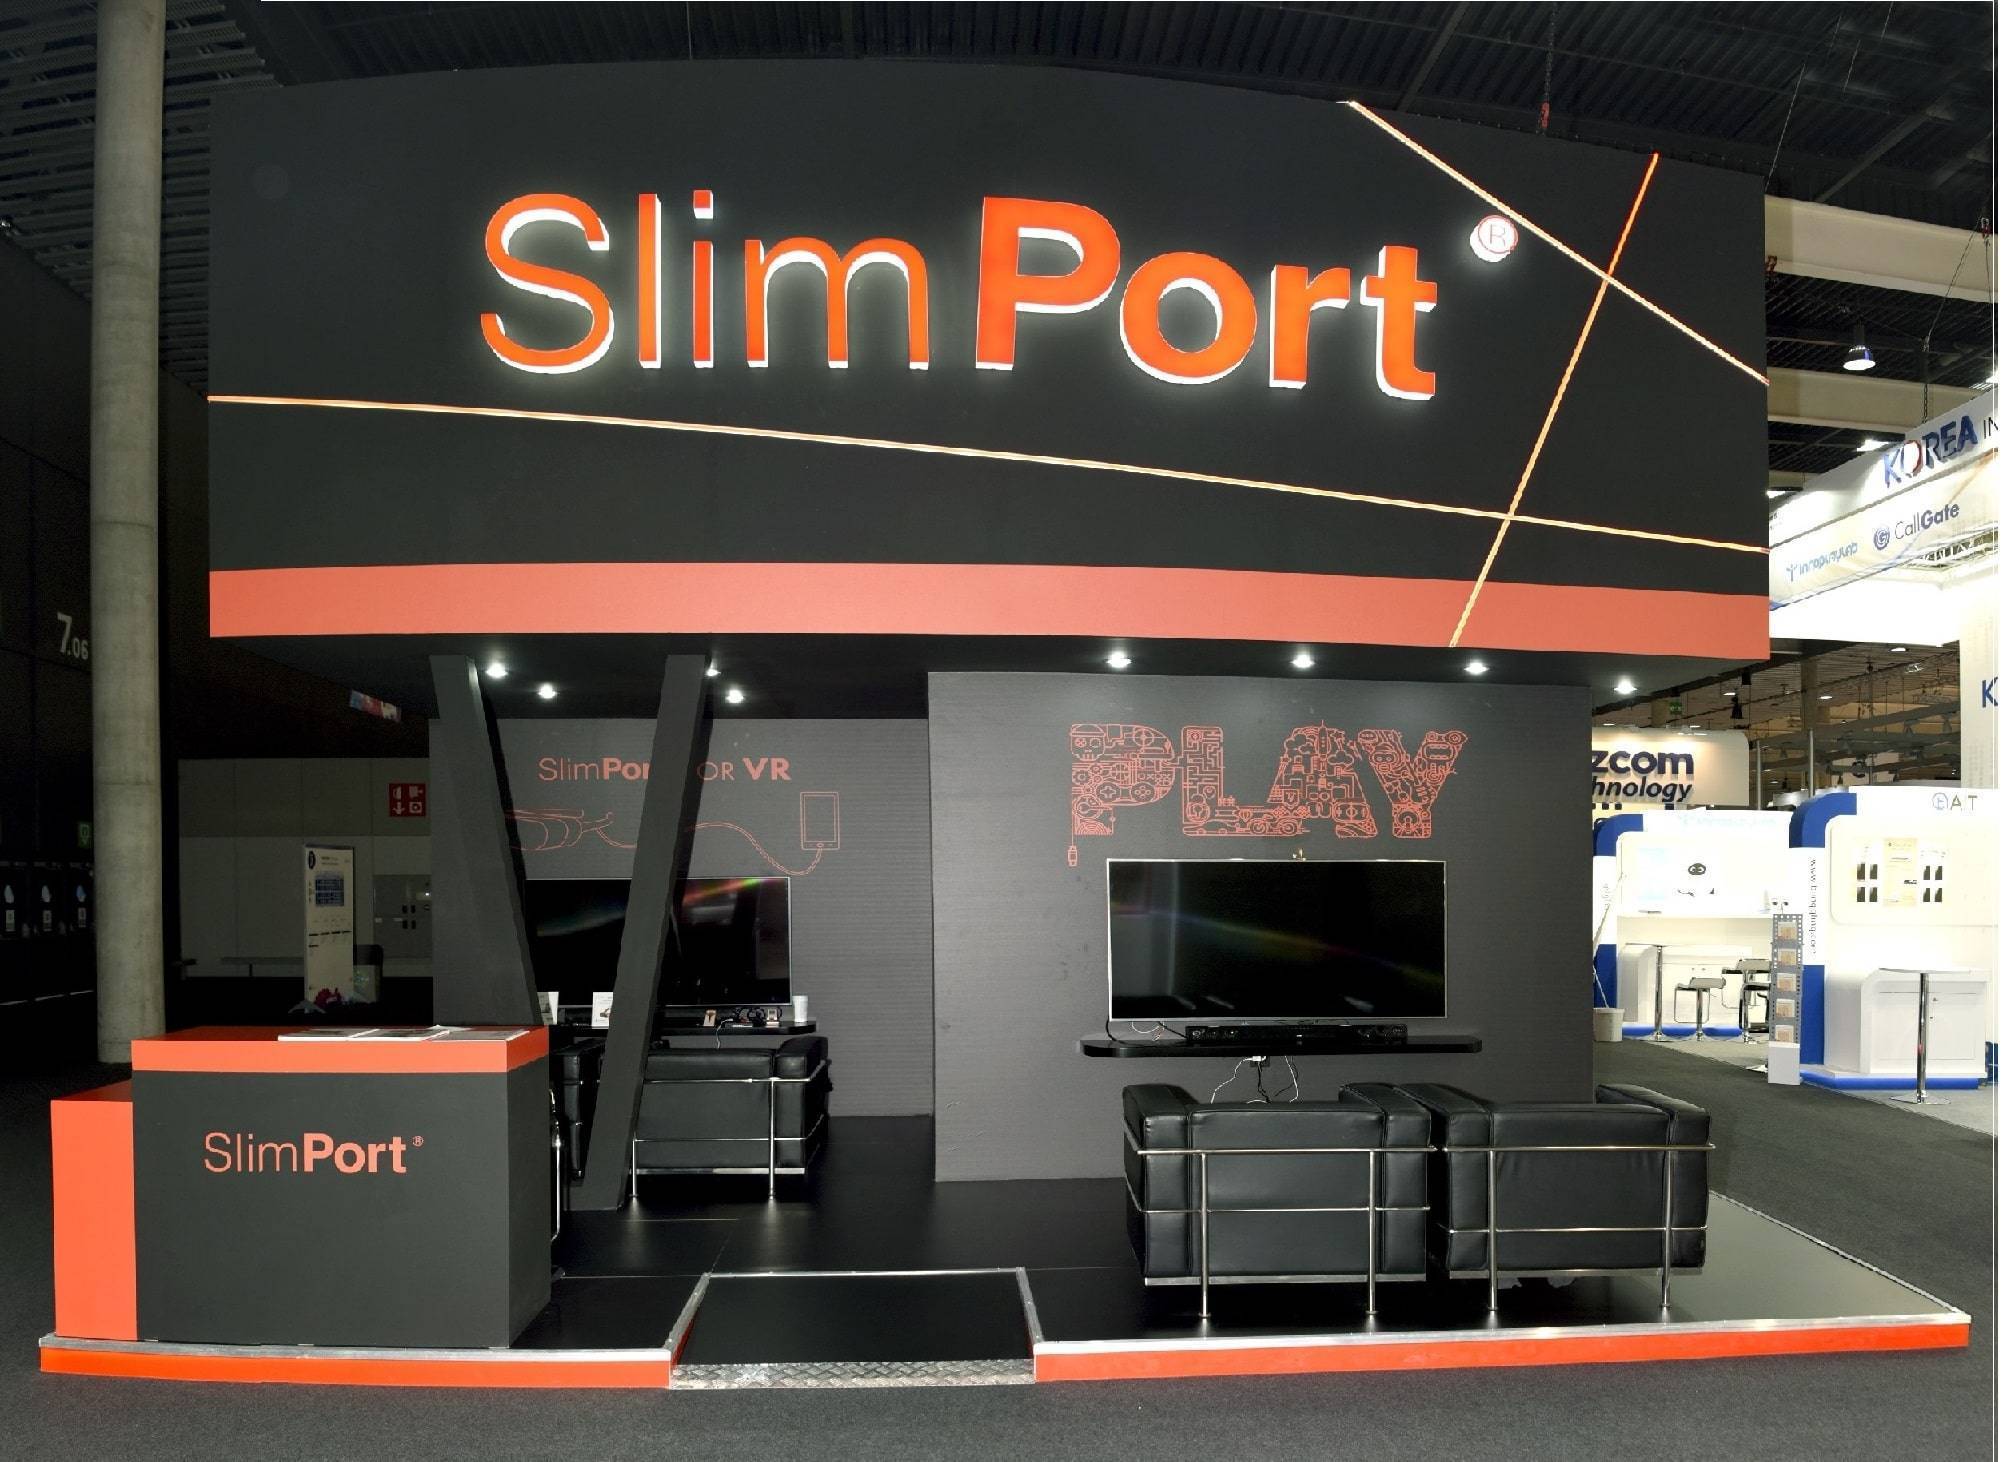 Slimport play VR